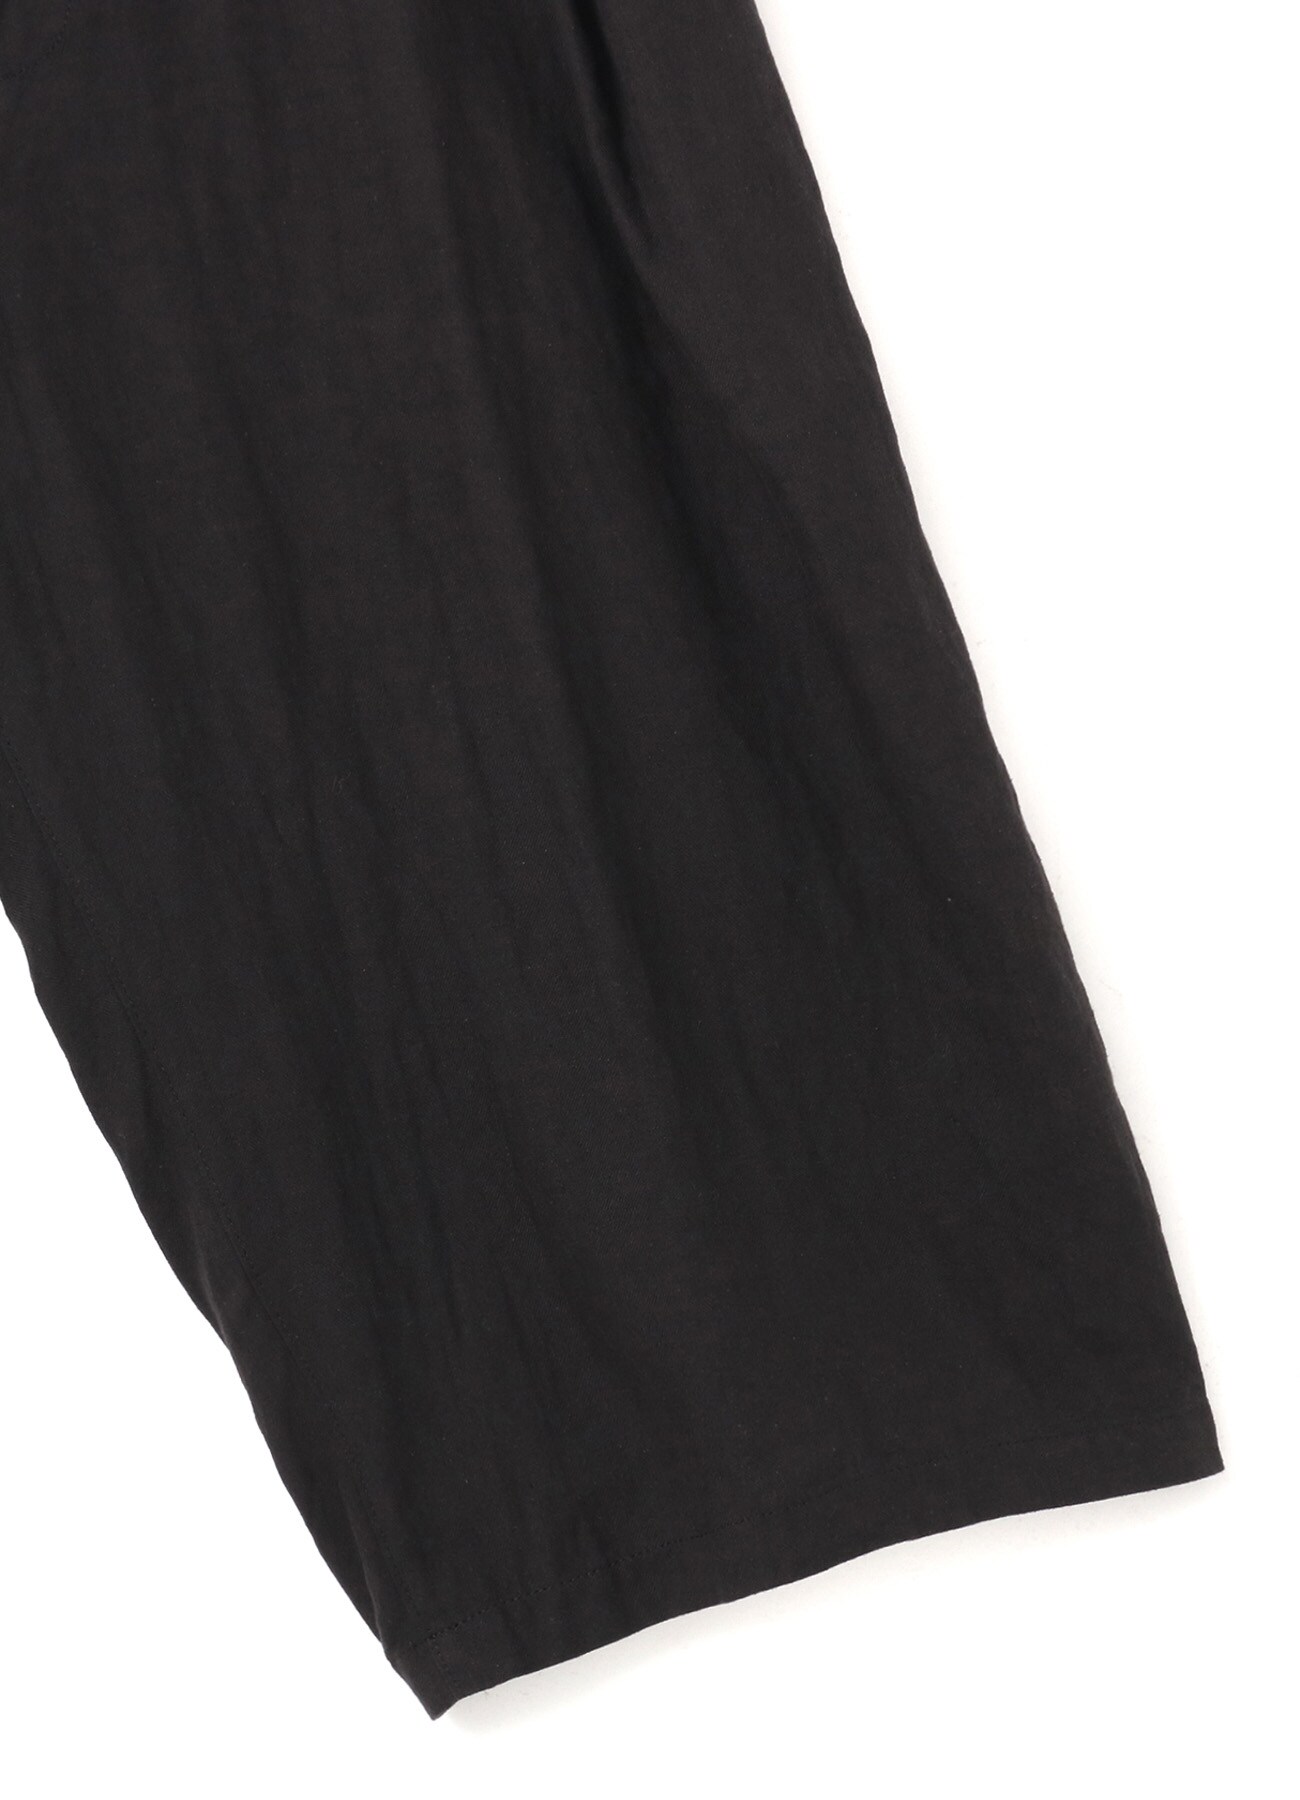 Li/C Washer Twill Indian Arabesque Pattern Layer One Tack 6-quarter-length Wrap Pants